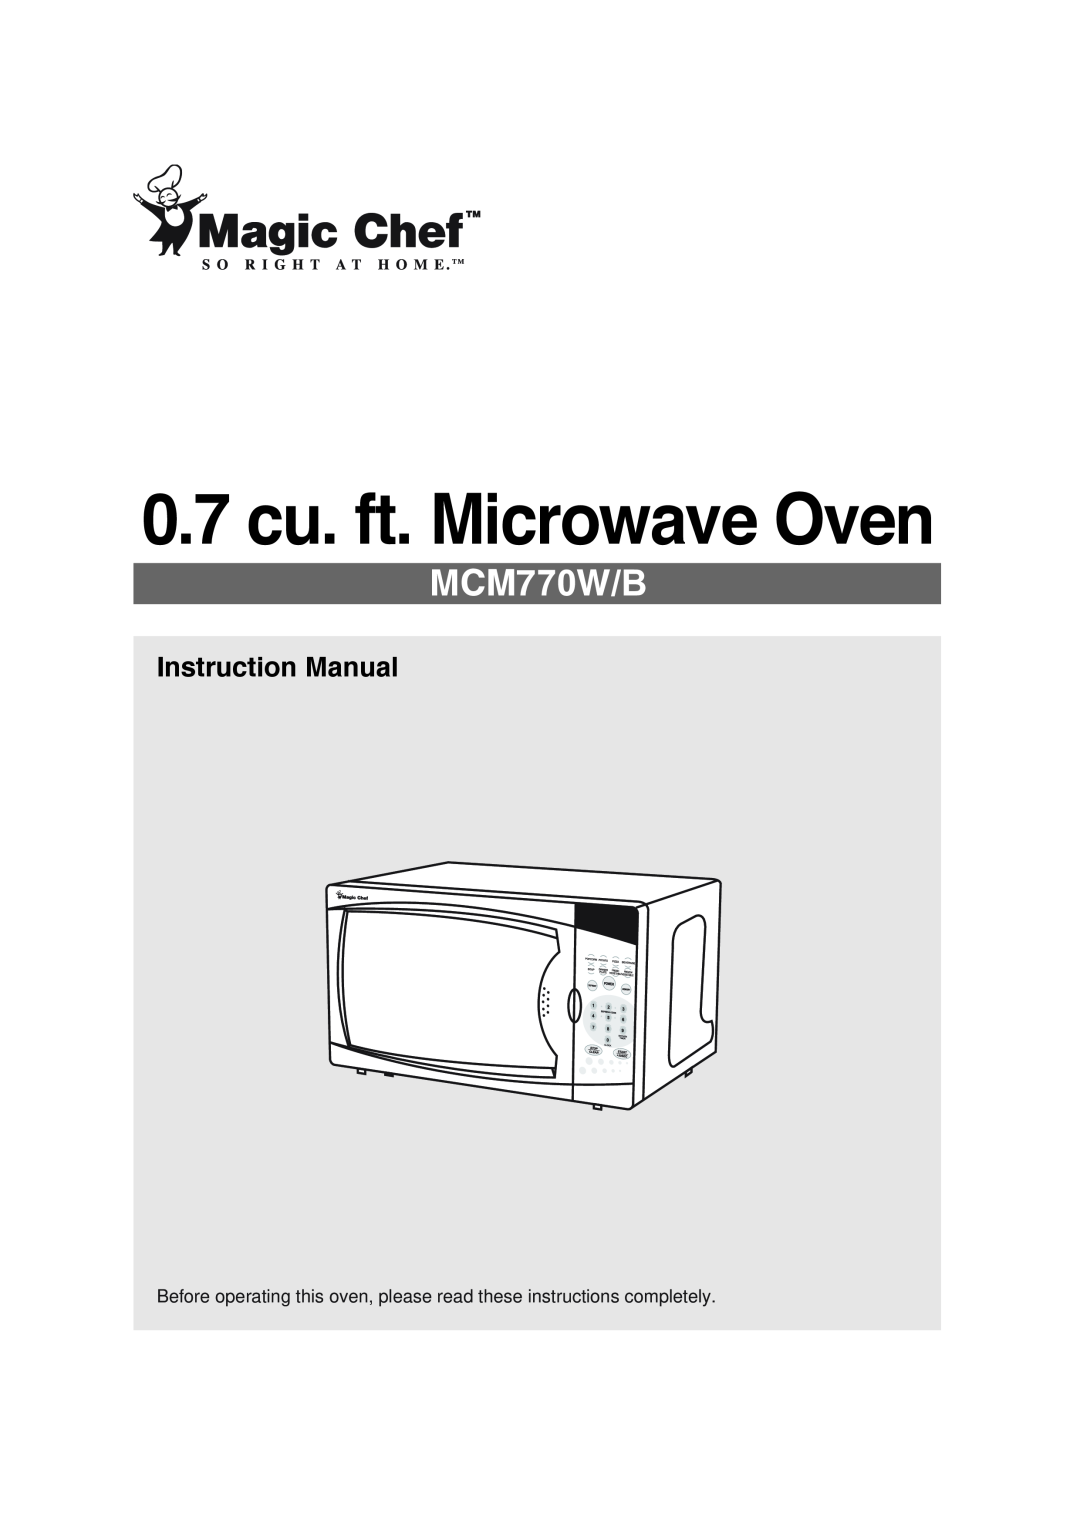 Magic Chef MCM770W/B instruction manual 0.7 cu. ft. Microwave Oven 